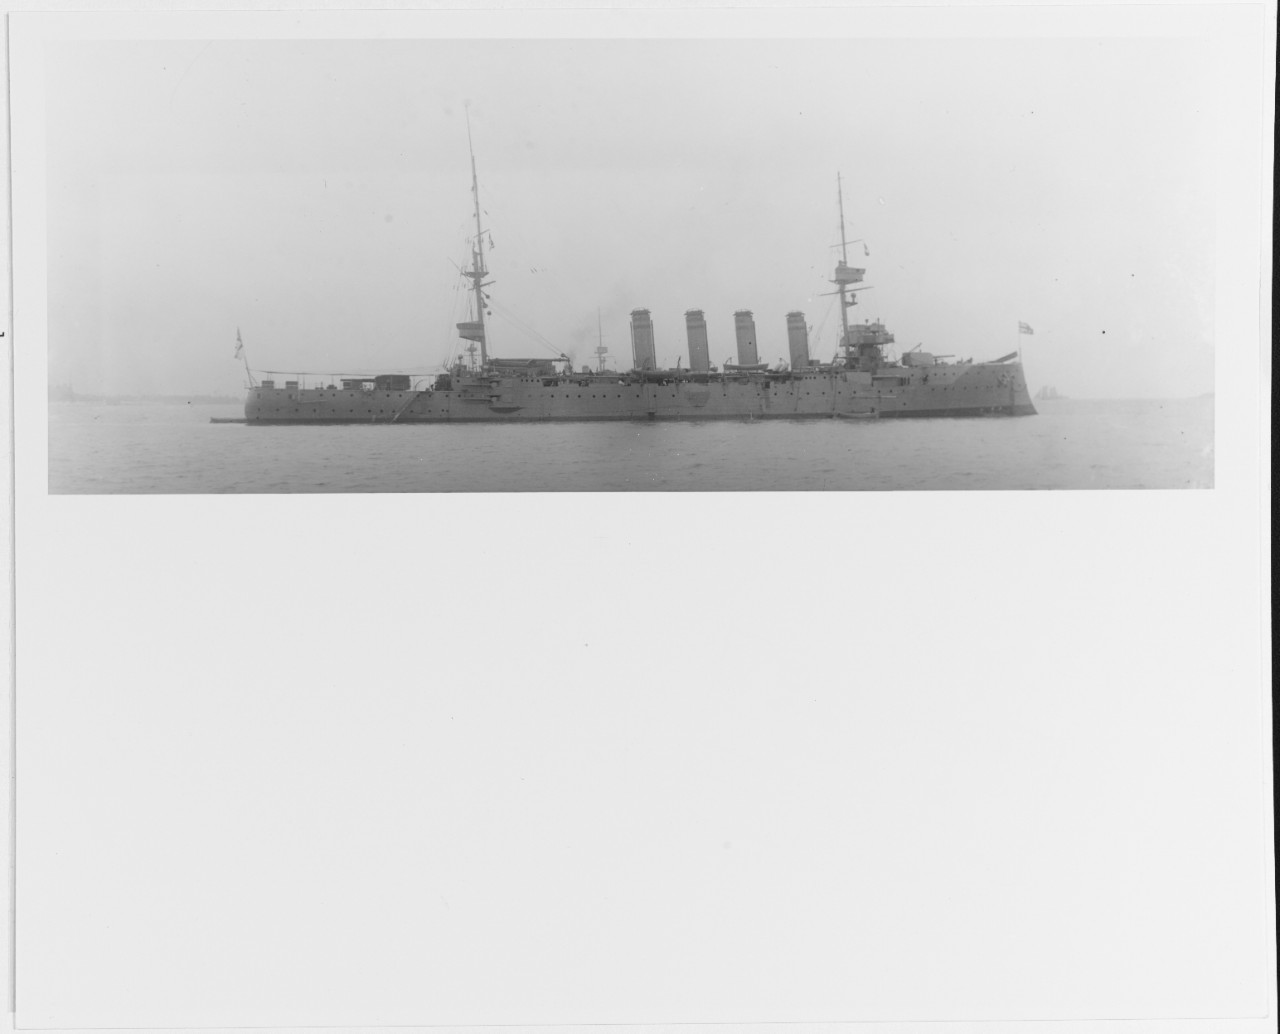 HMS ROXBURGH (British armored cruiser, 1904)